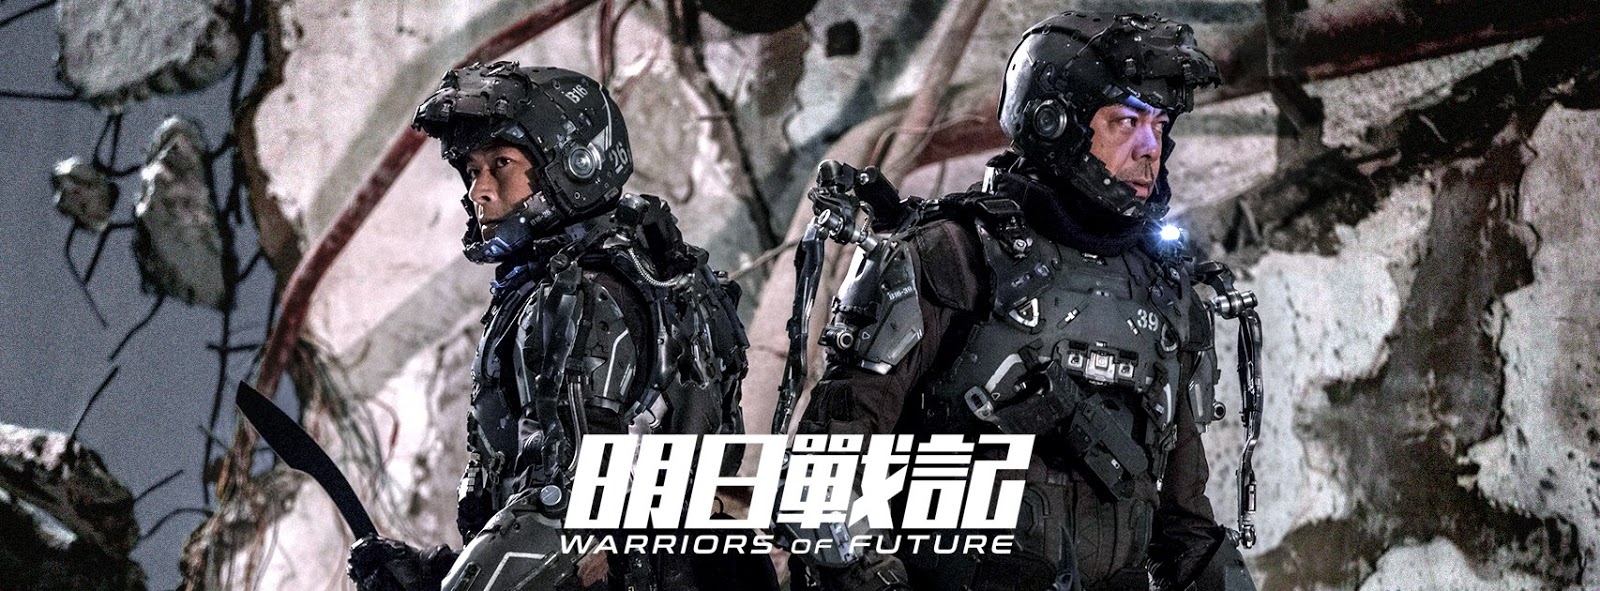 Warriorsoffuture Trailers Stills Of Upcoming Hong Kong Sci Fi Film Images, Photos, Reviews